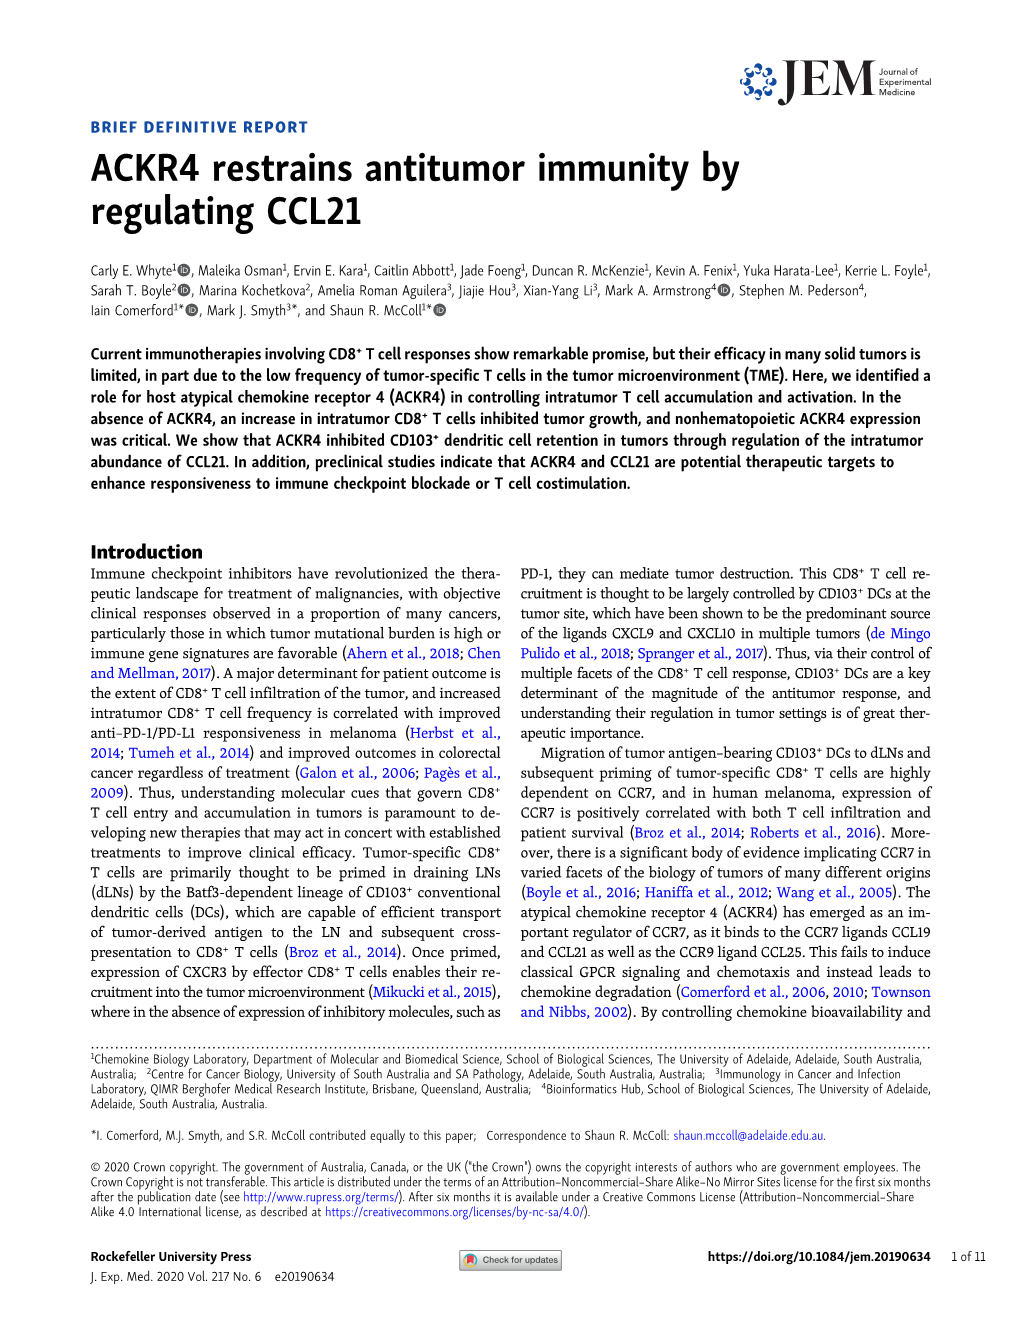 ACKR4 Restrains Antitumor Immunity by Regulating CCL21